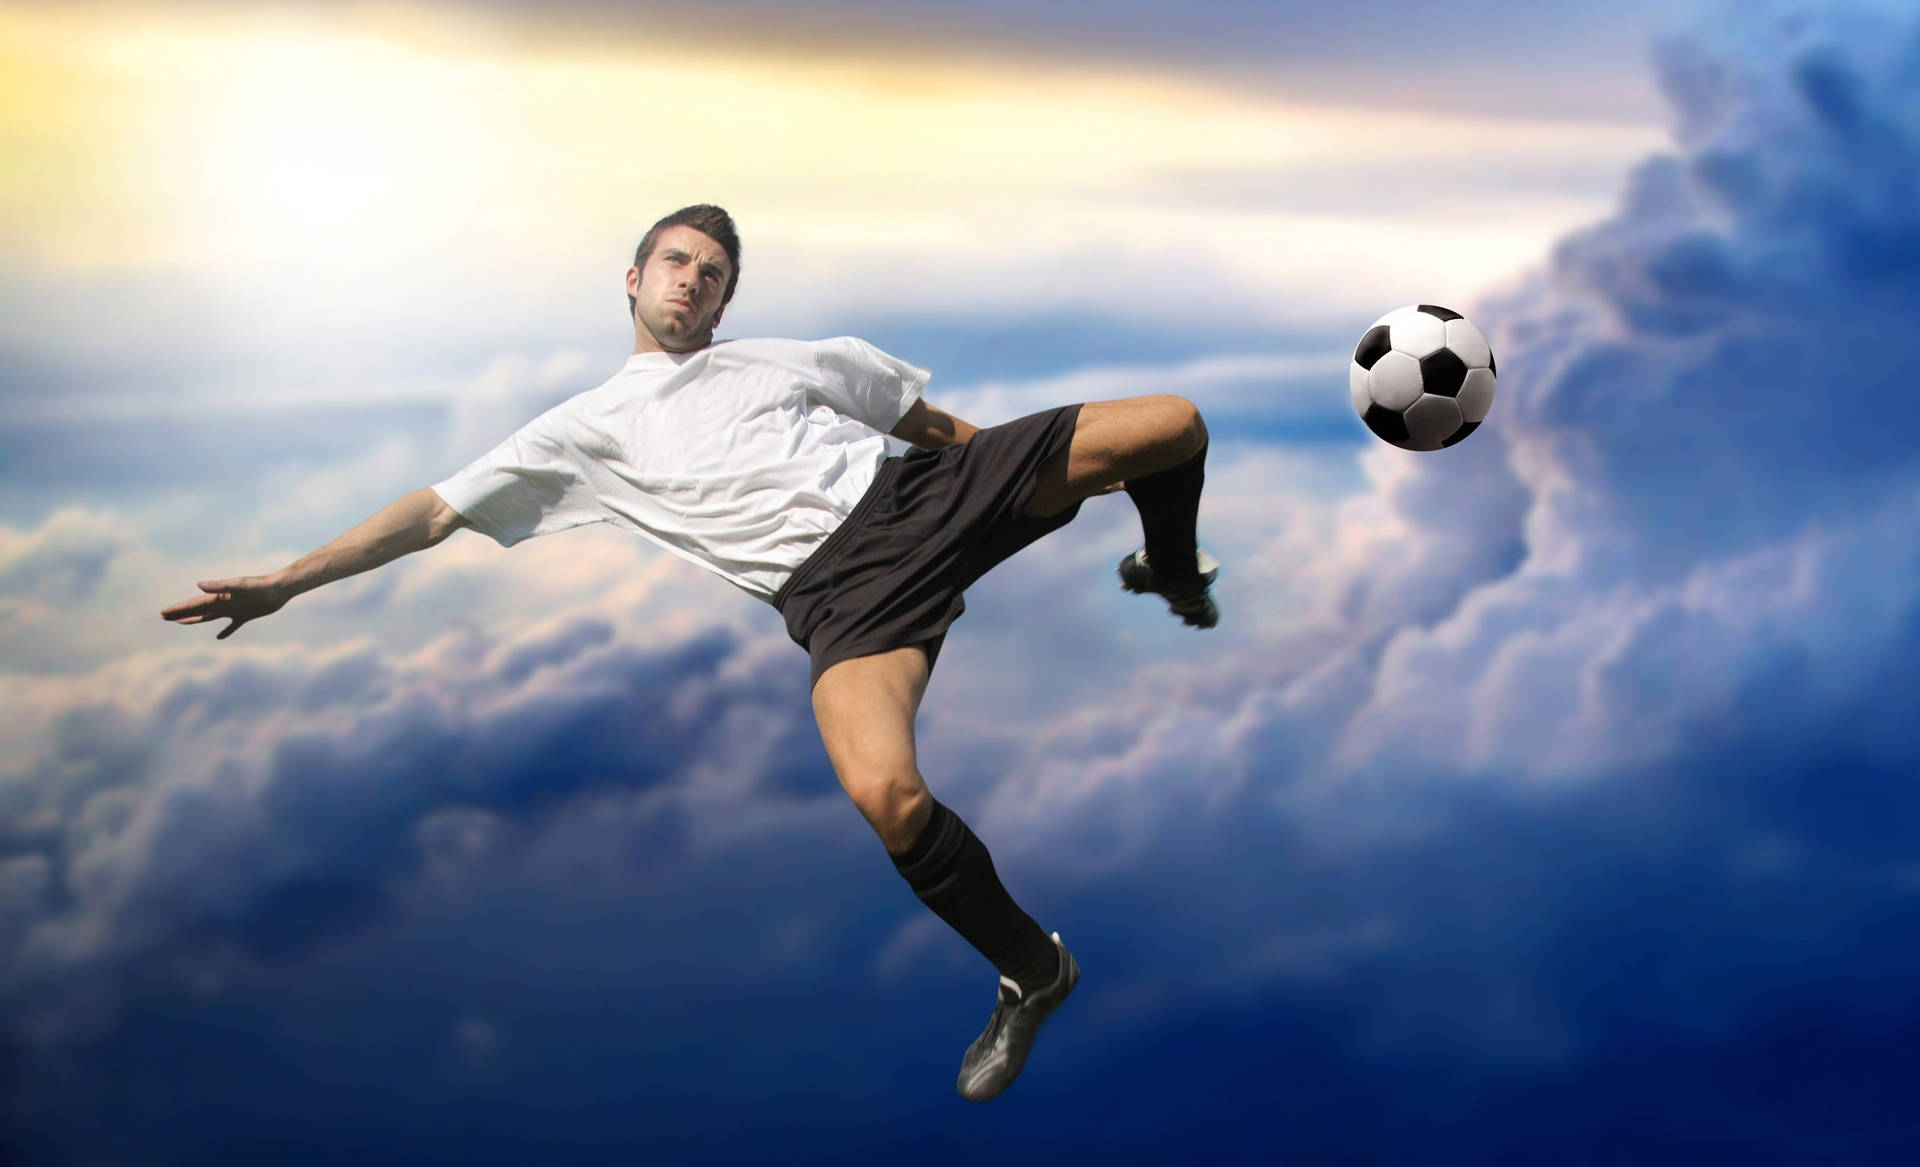 Cool Soccer Kick Illustration